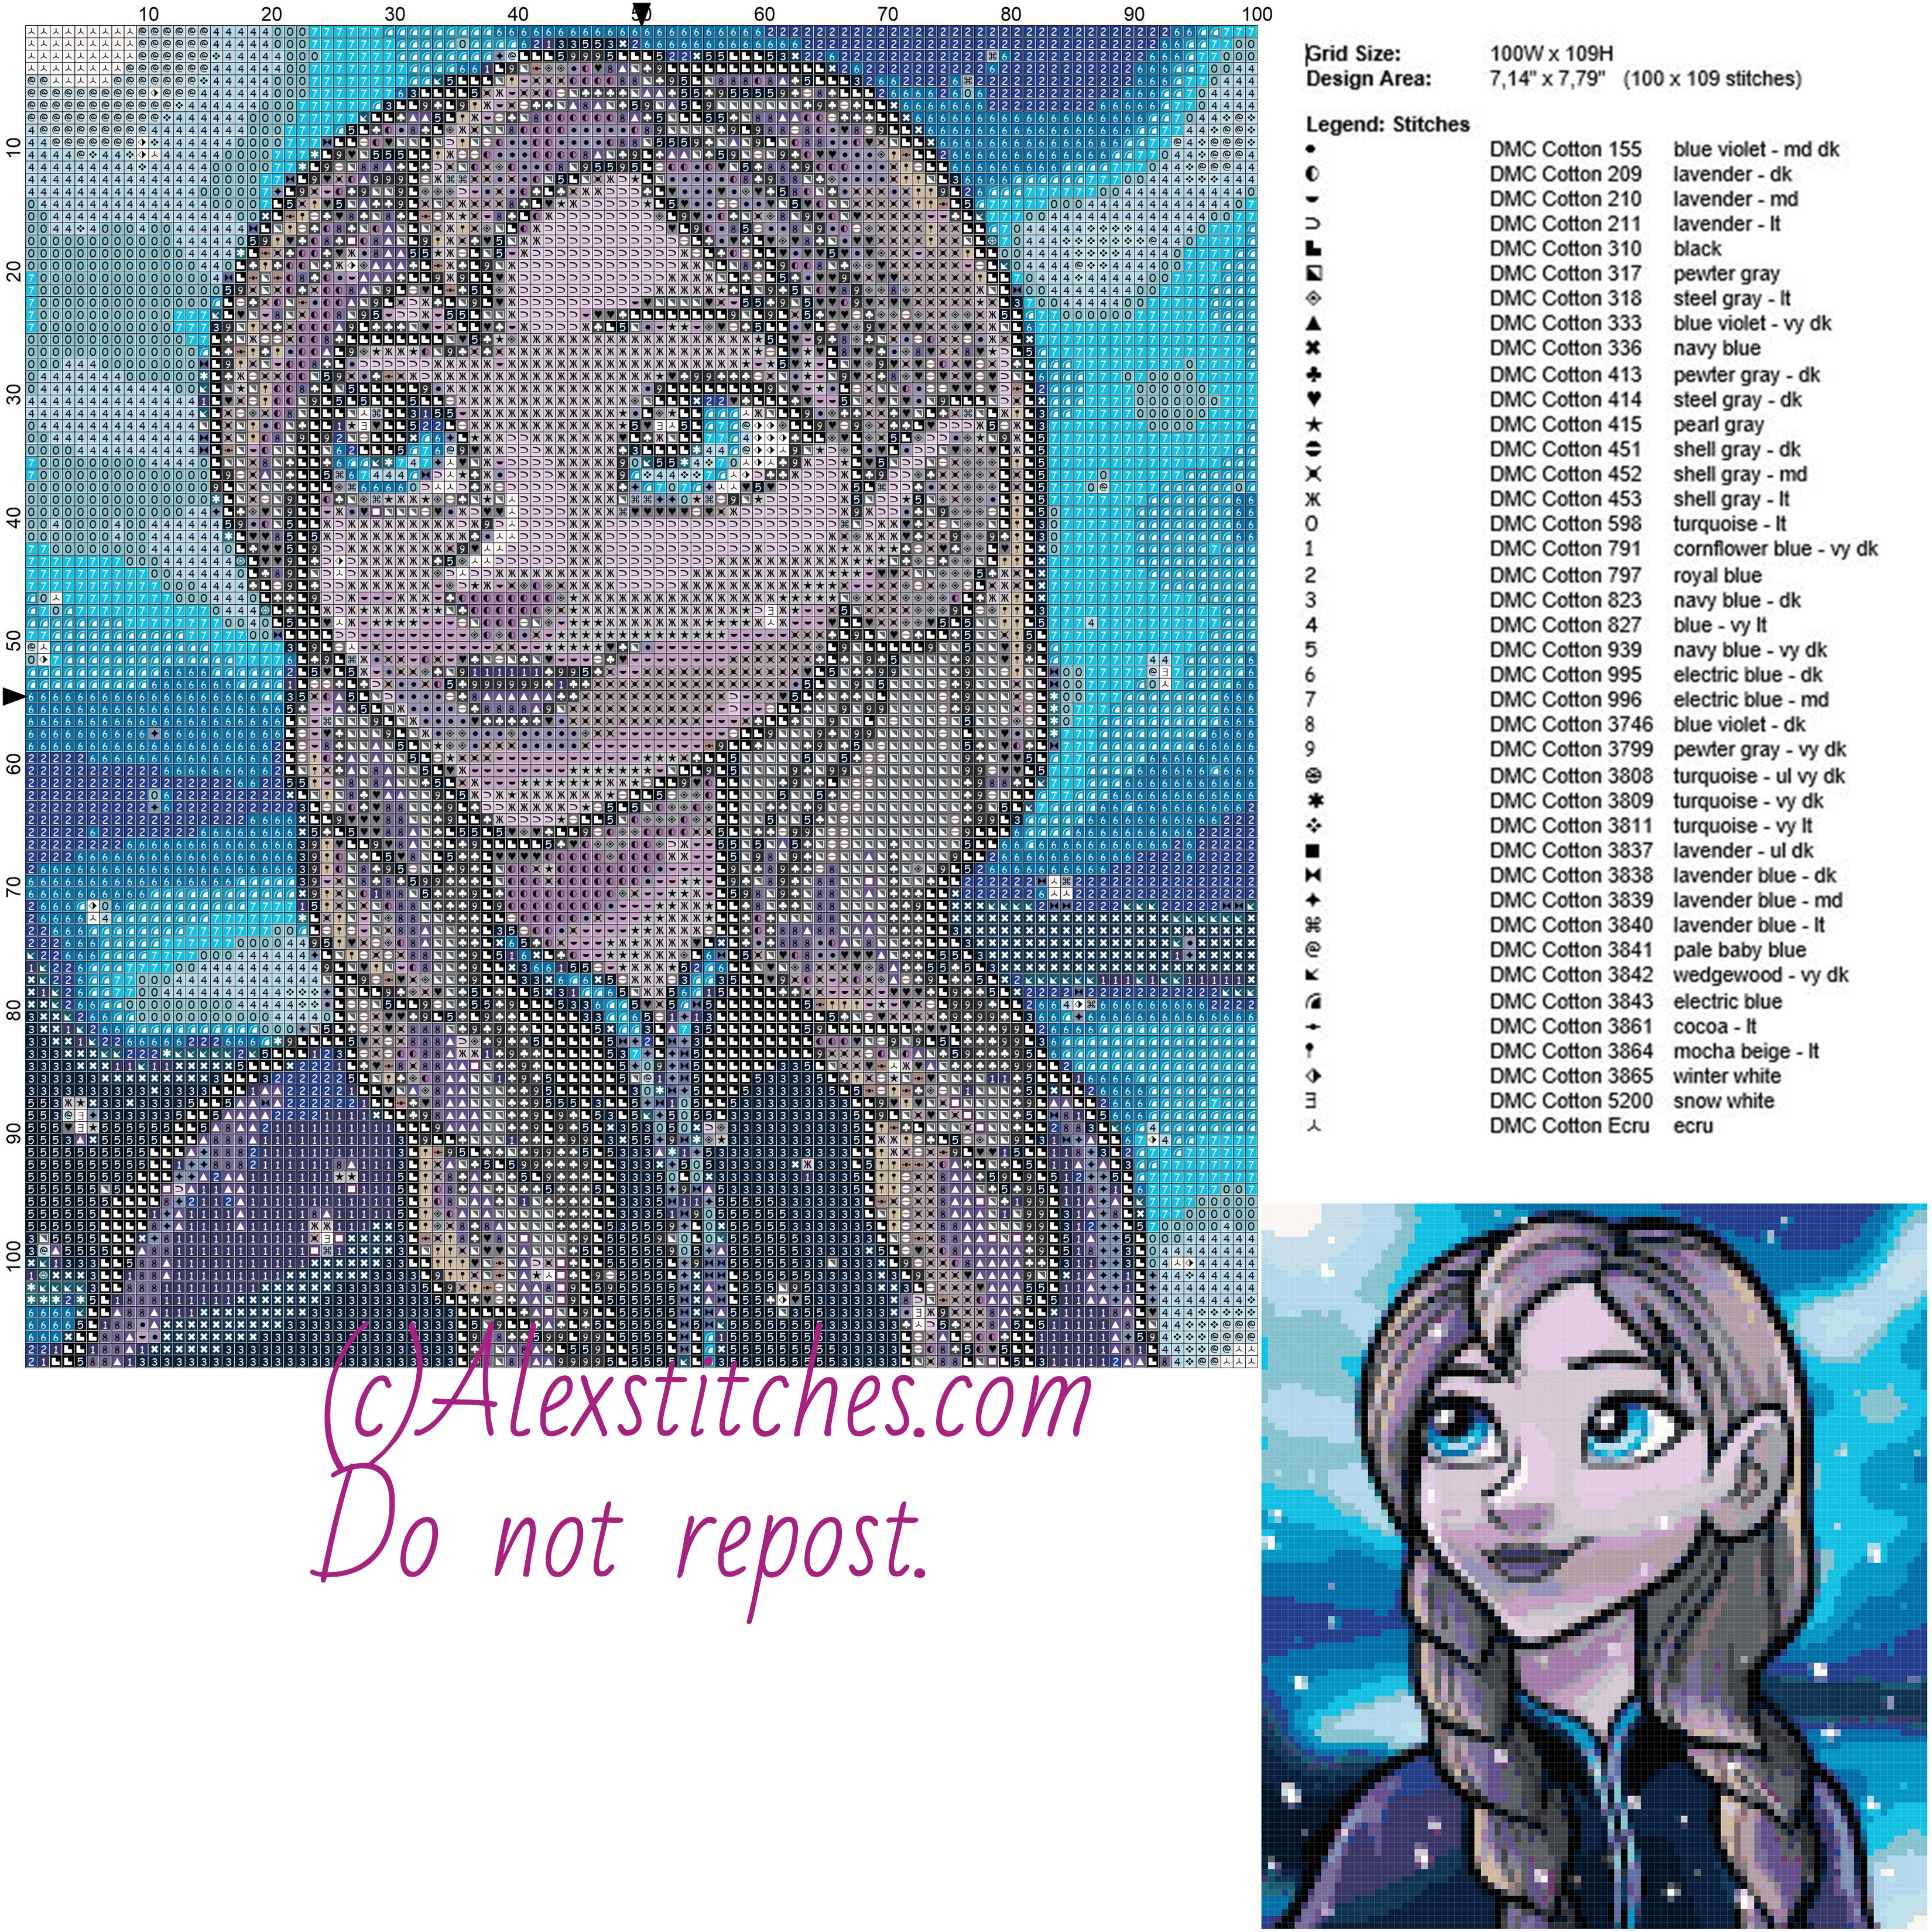 Anna princess Disney free cross stitch pattern 100x109 40 colors